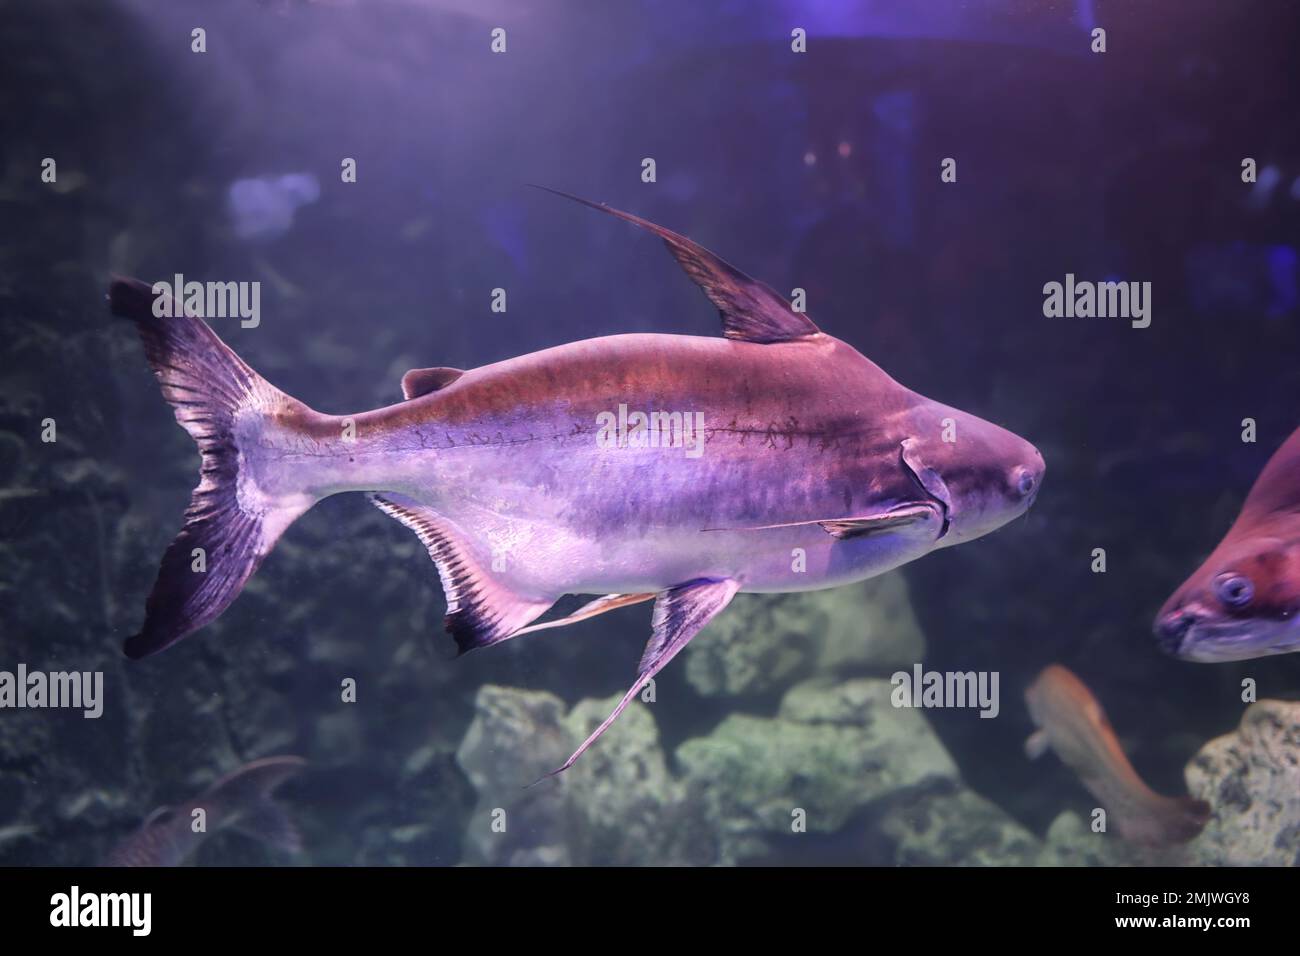 Gaff topsail catfish swimming in clear aquarium Stock Photo